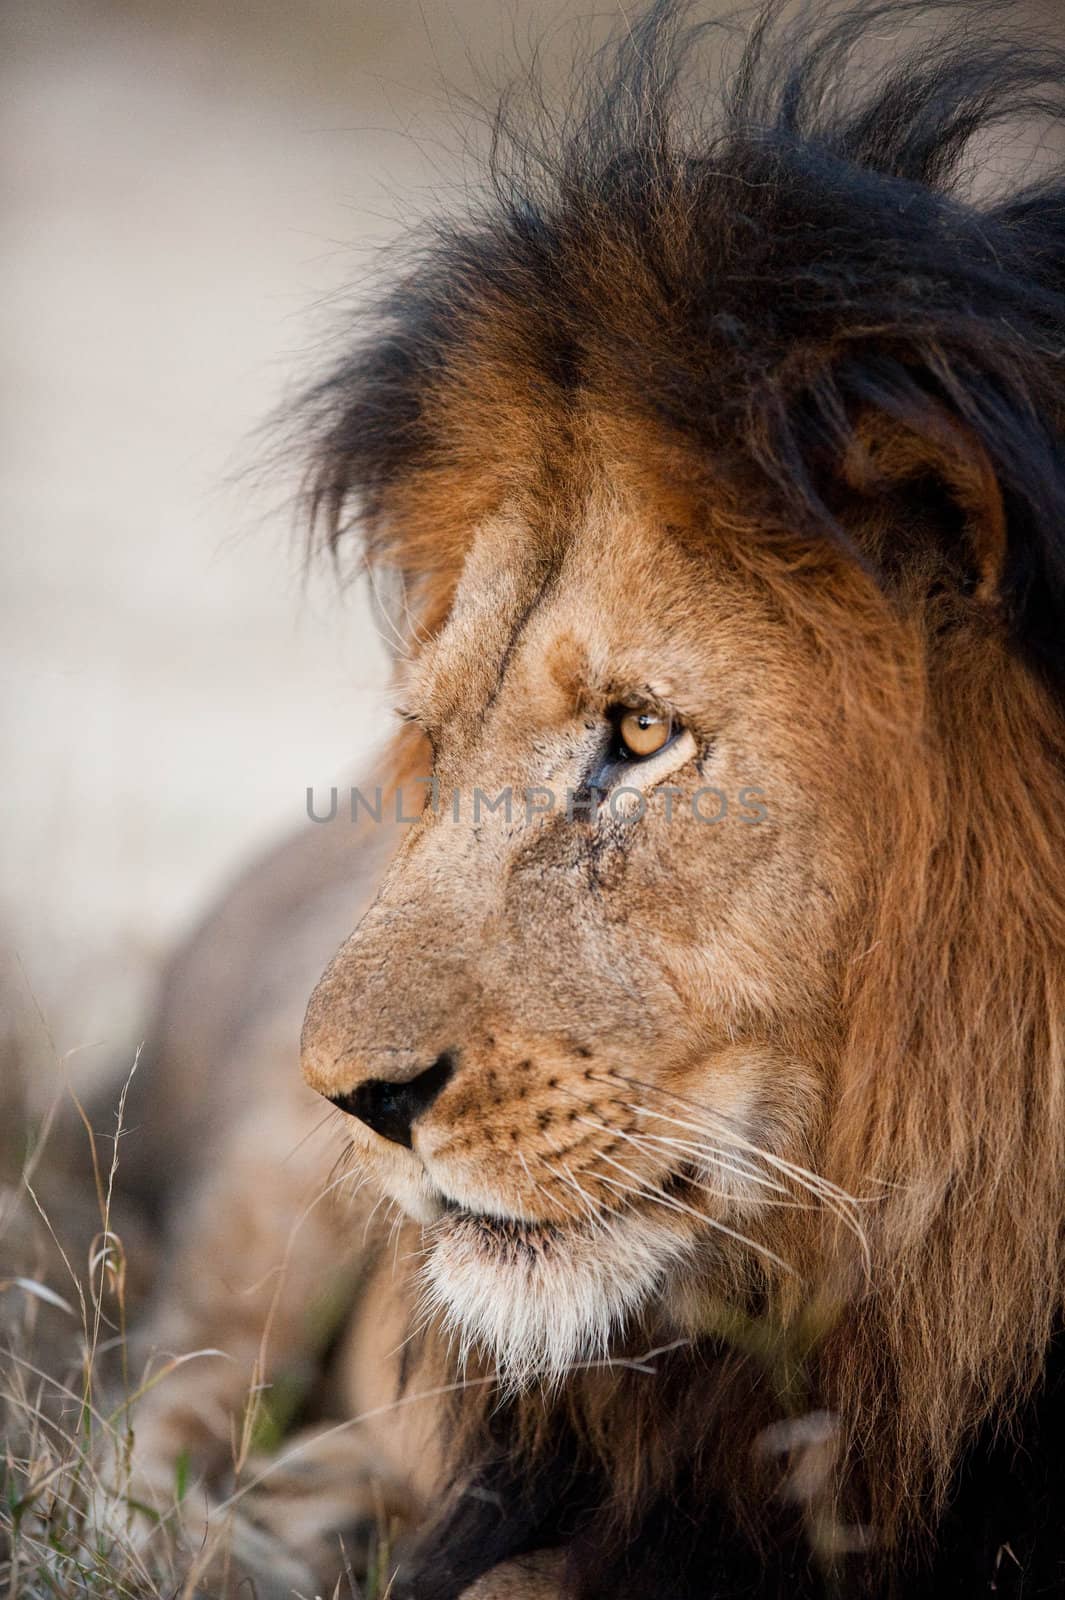 Older male lion by edan